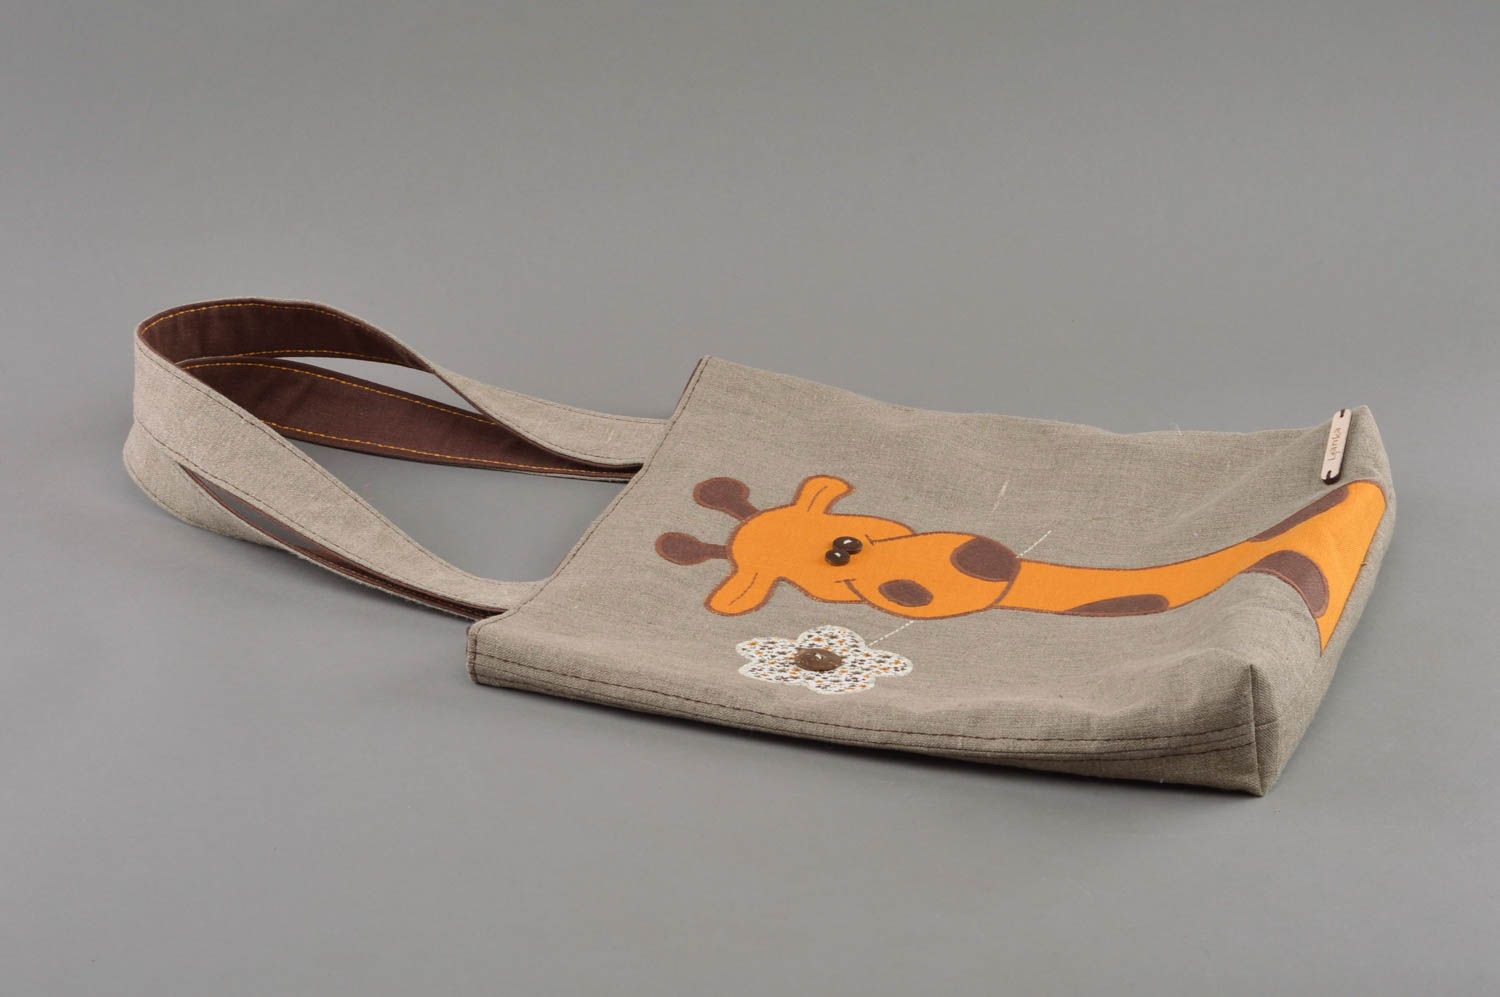 Handmade designer linen bag with two handles gray with giraffe image photo 1